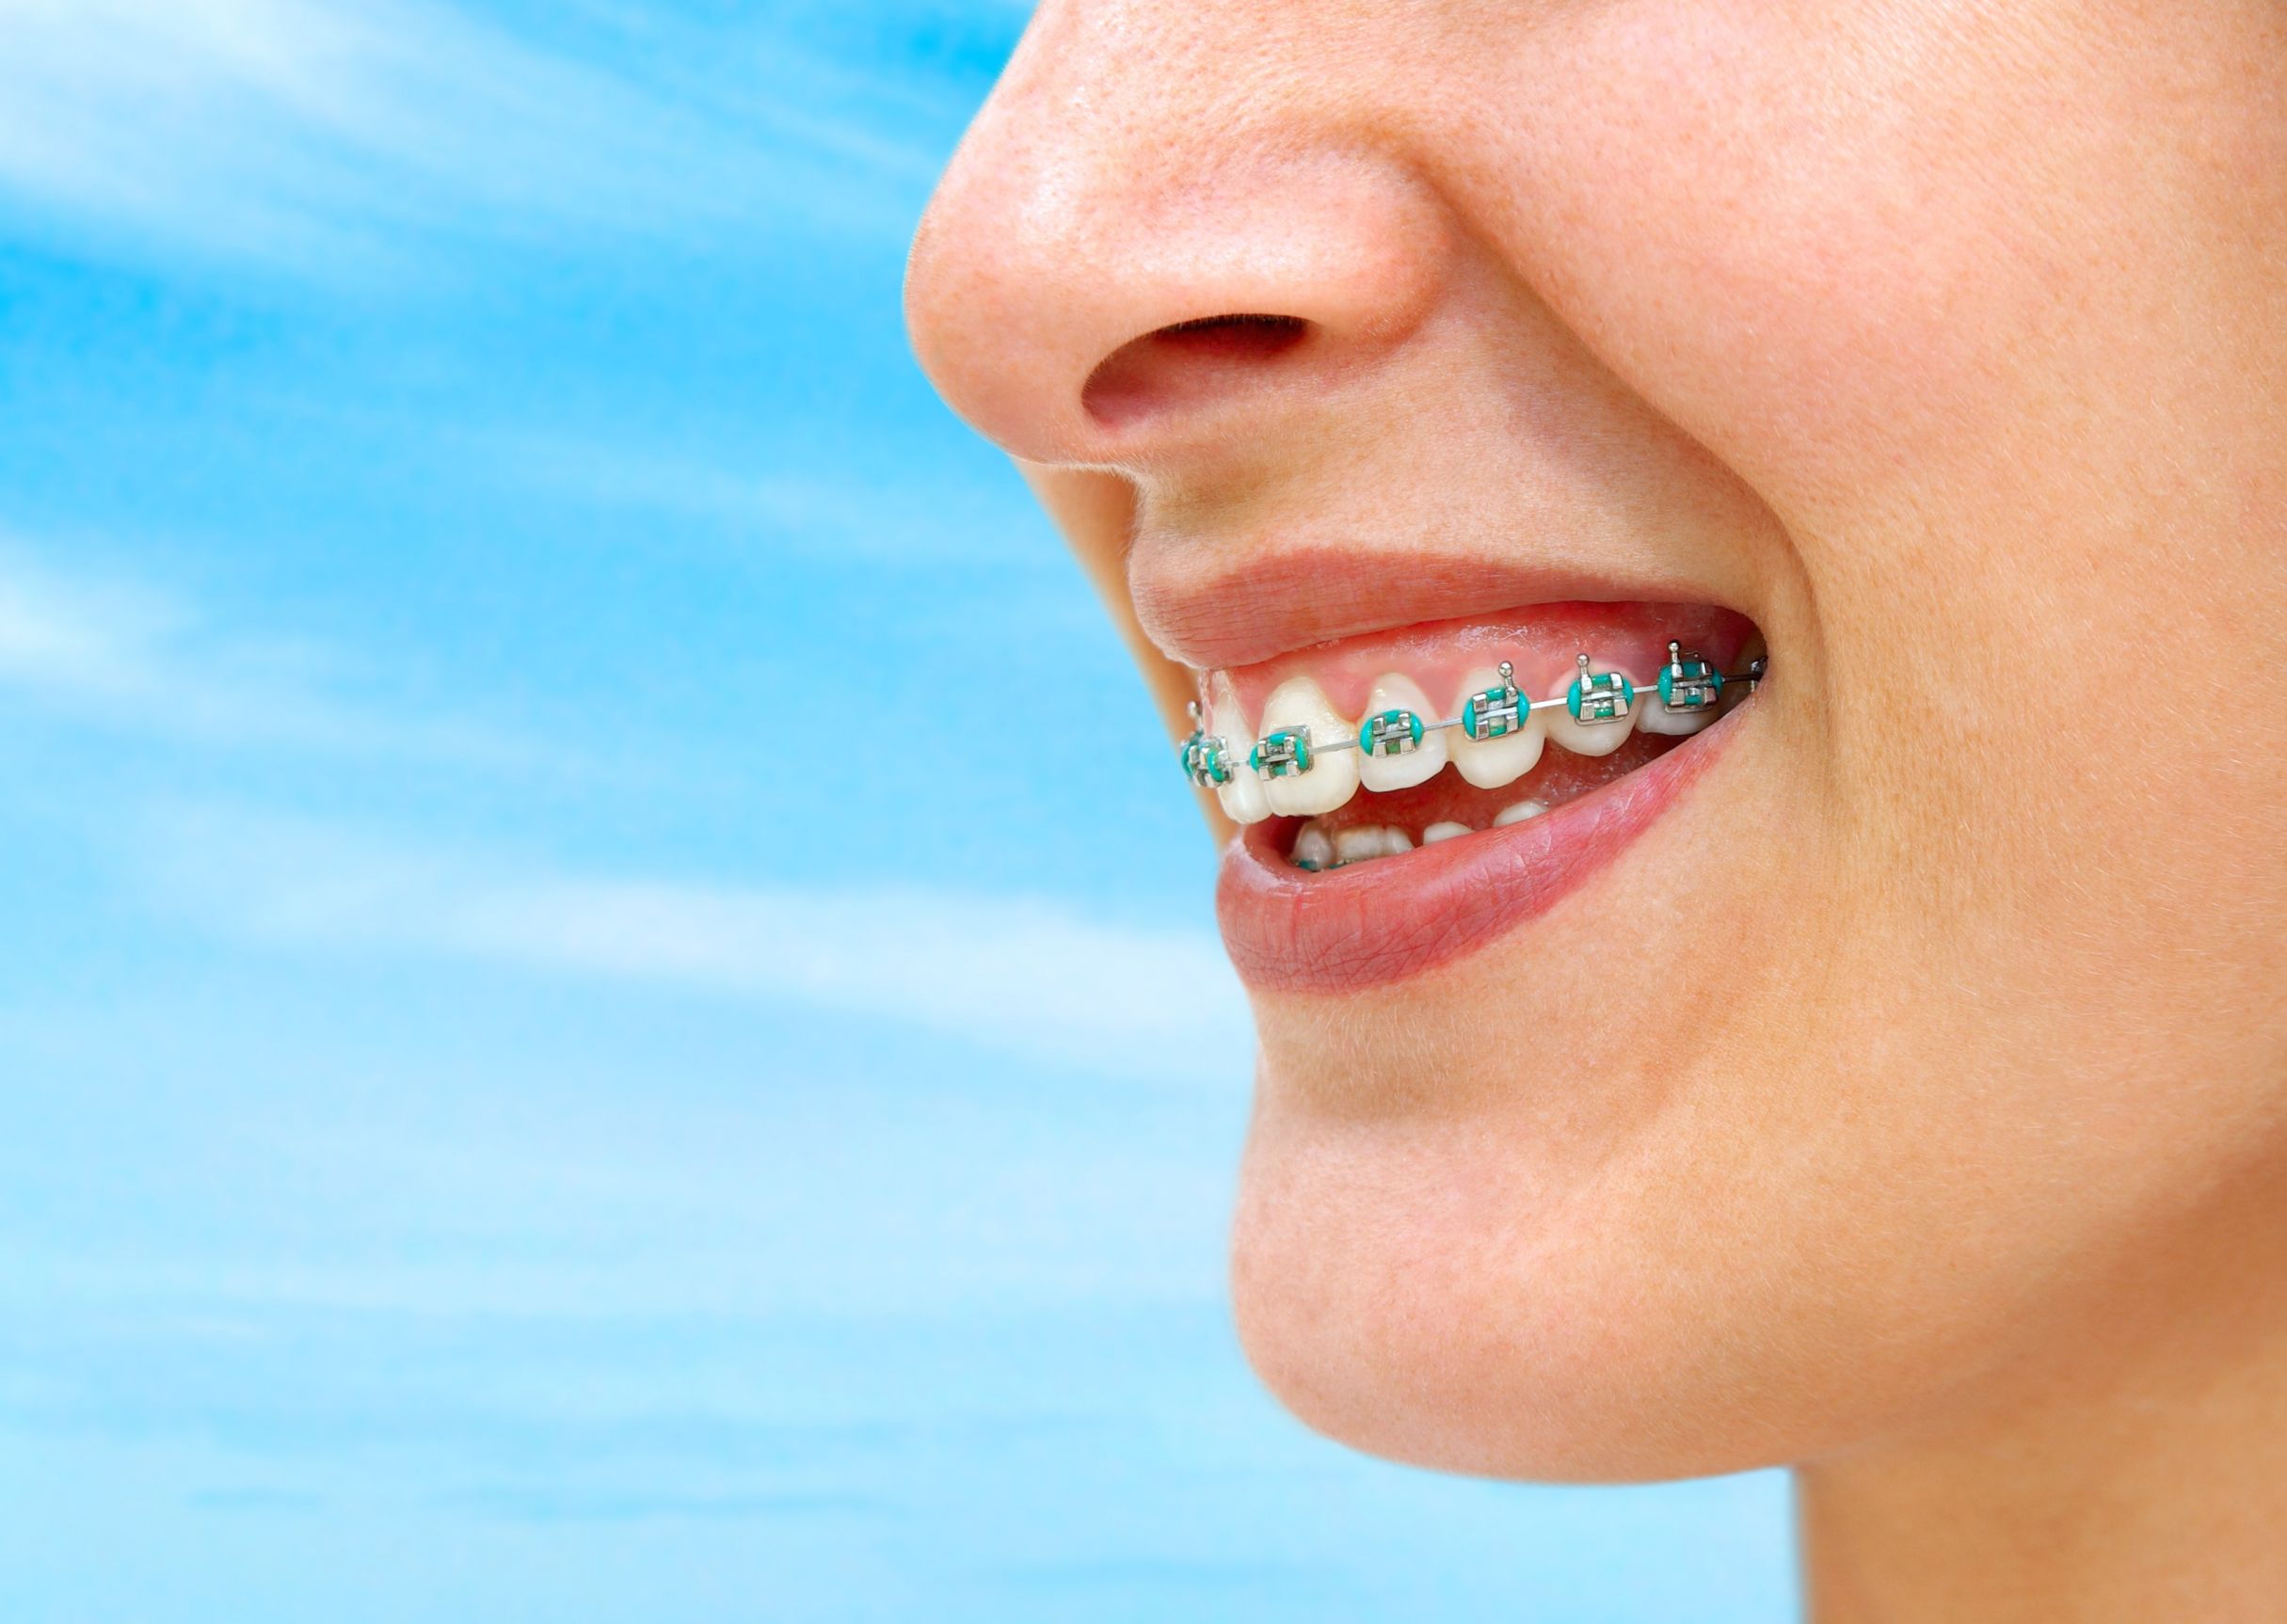  dental implants